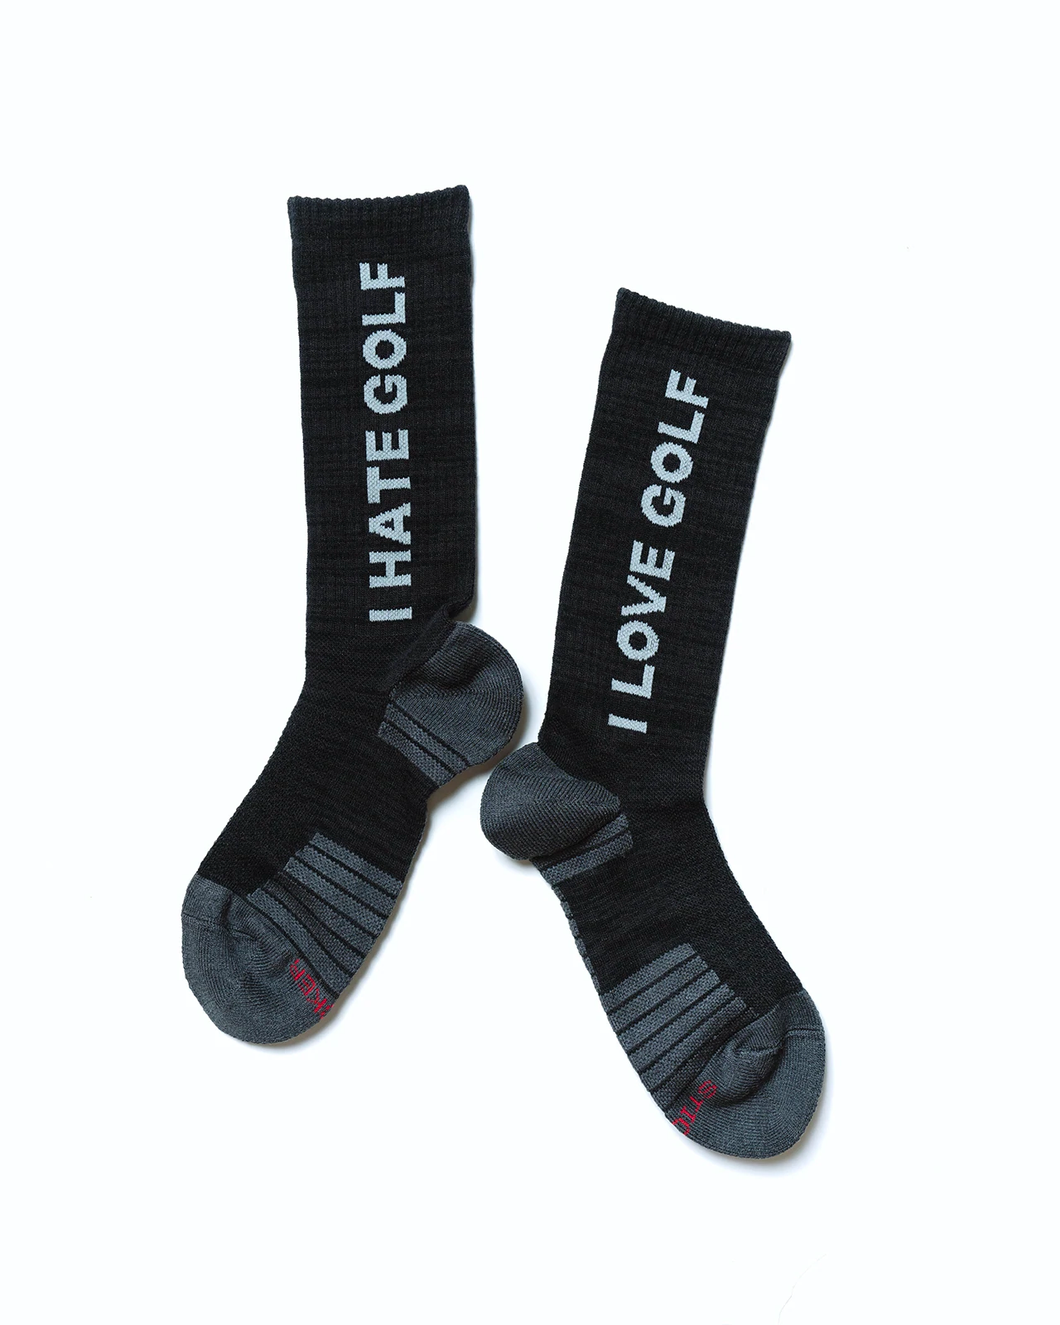 Grip Socks I HATE GOLF - Black Heather